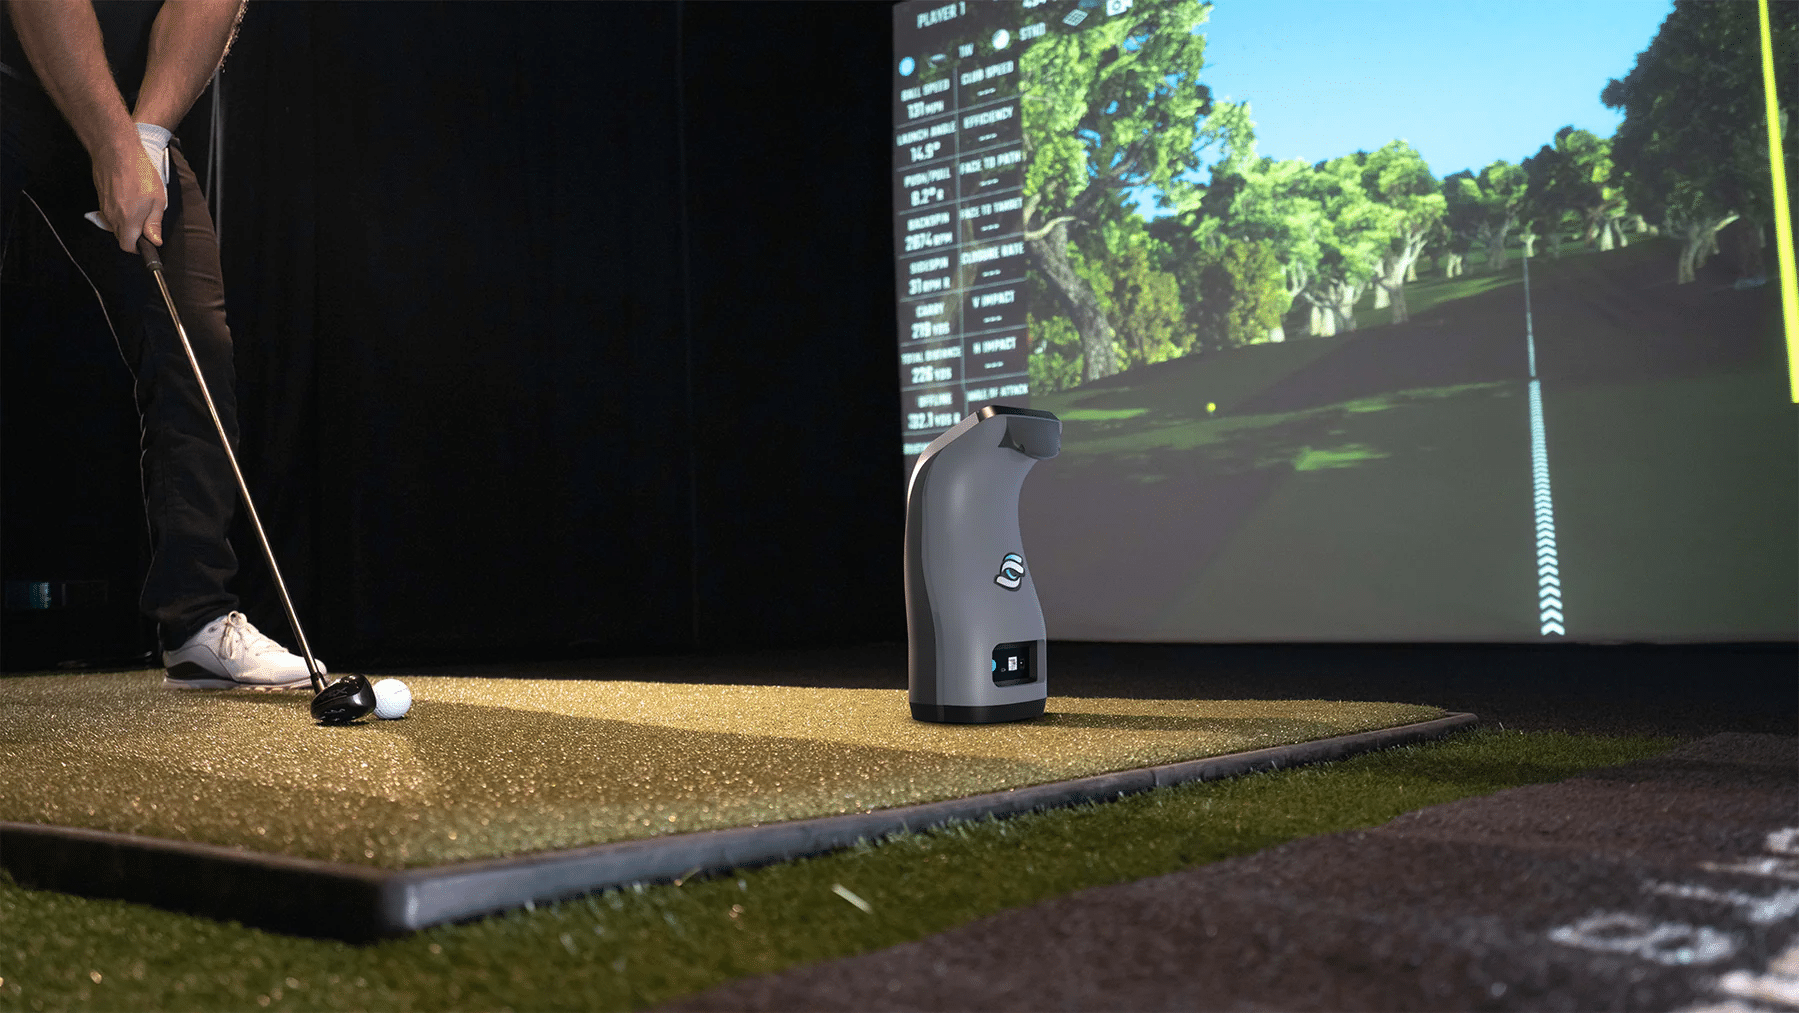 Foresight Sports GC3 Essentials Plus Bundle Golf Simulator